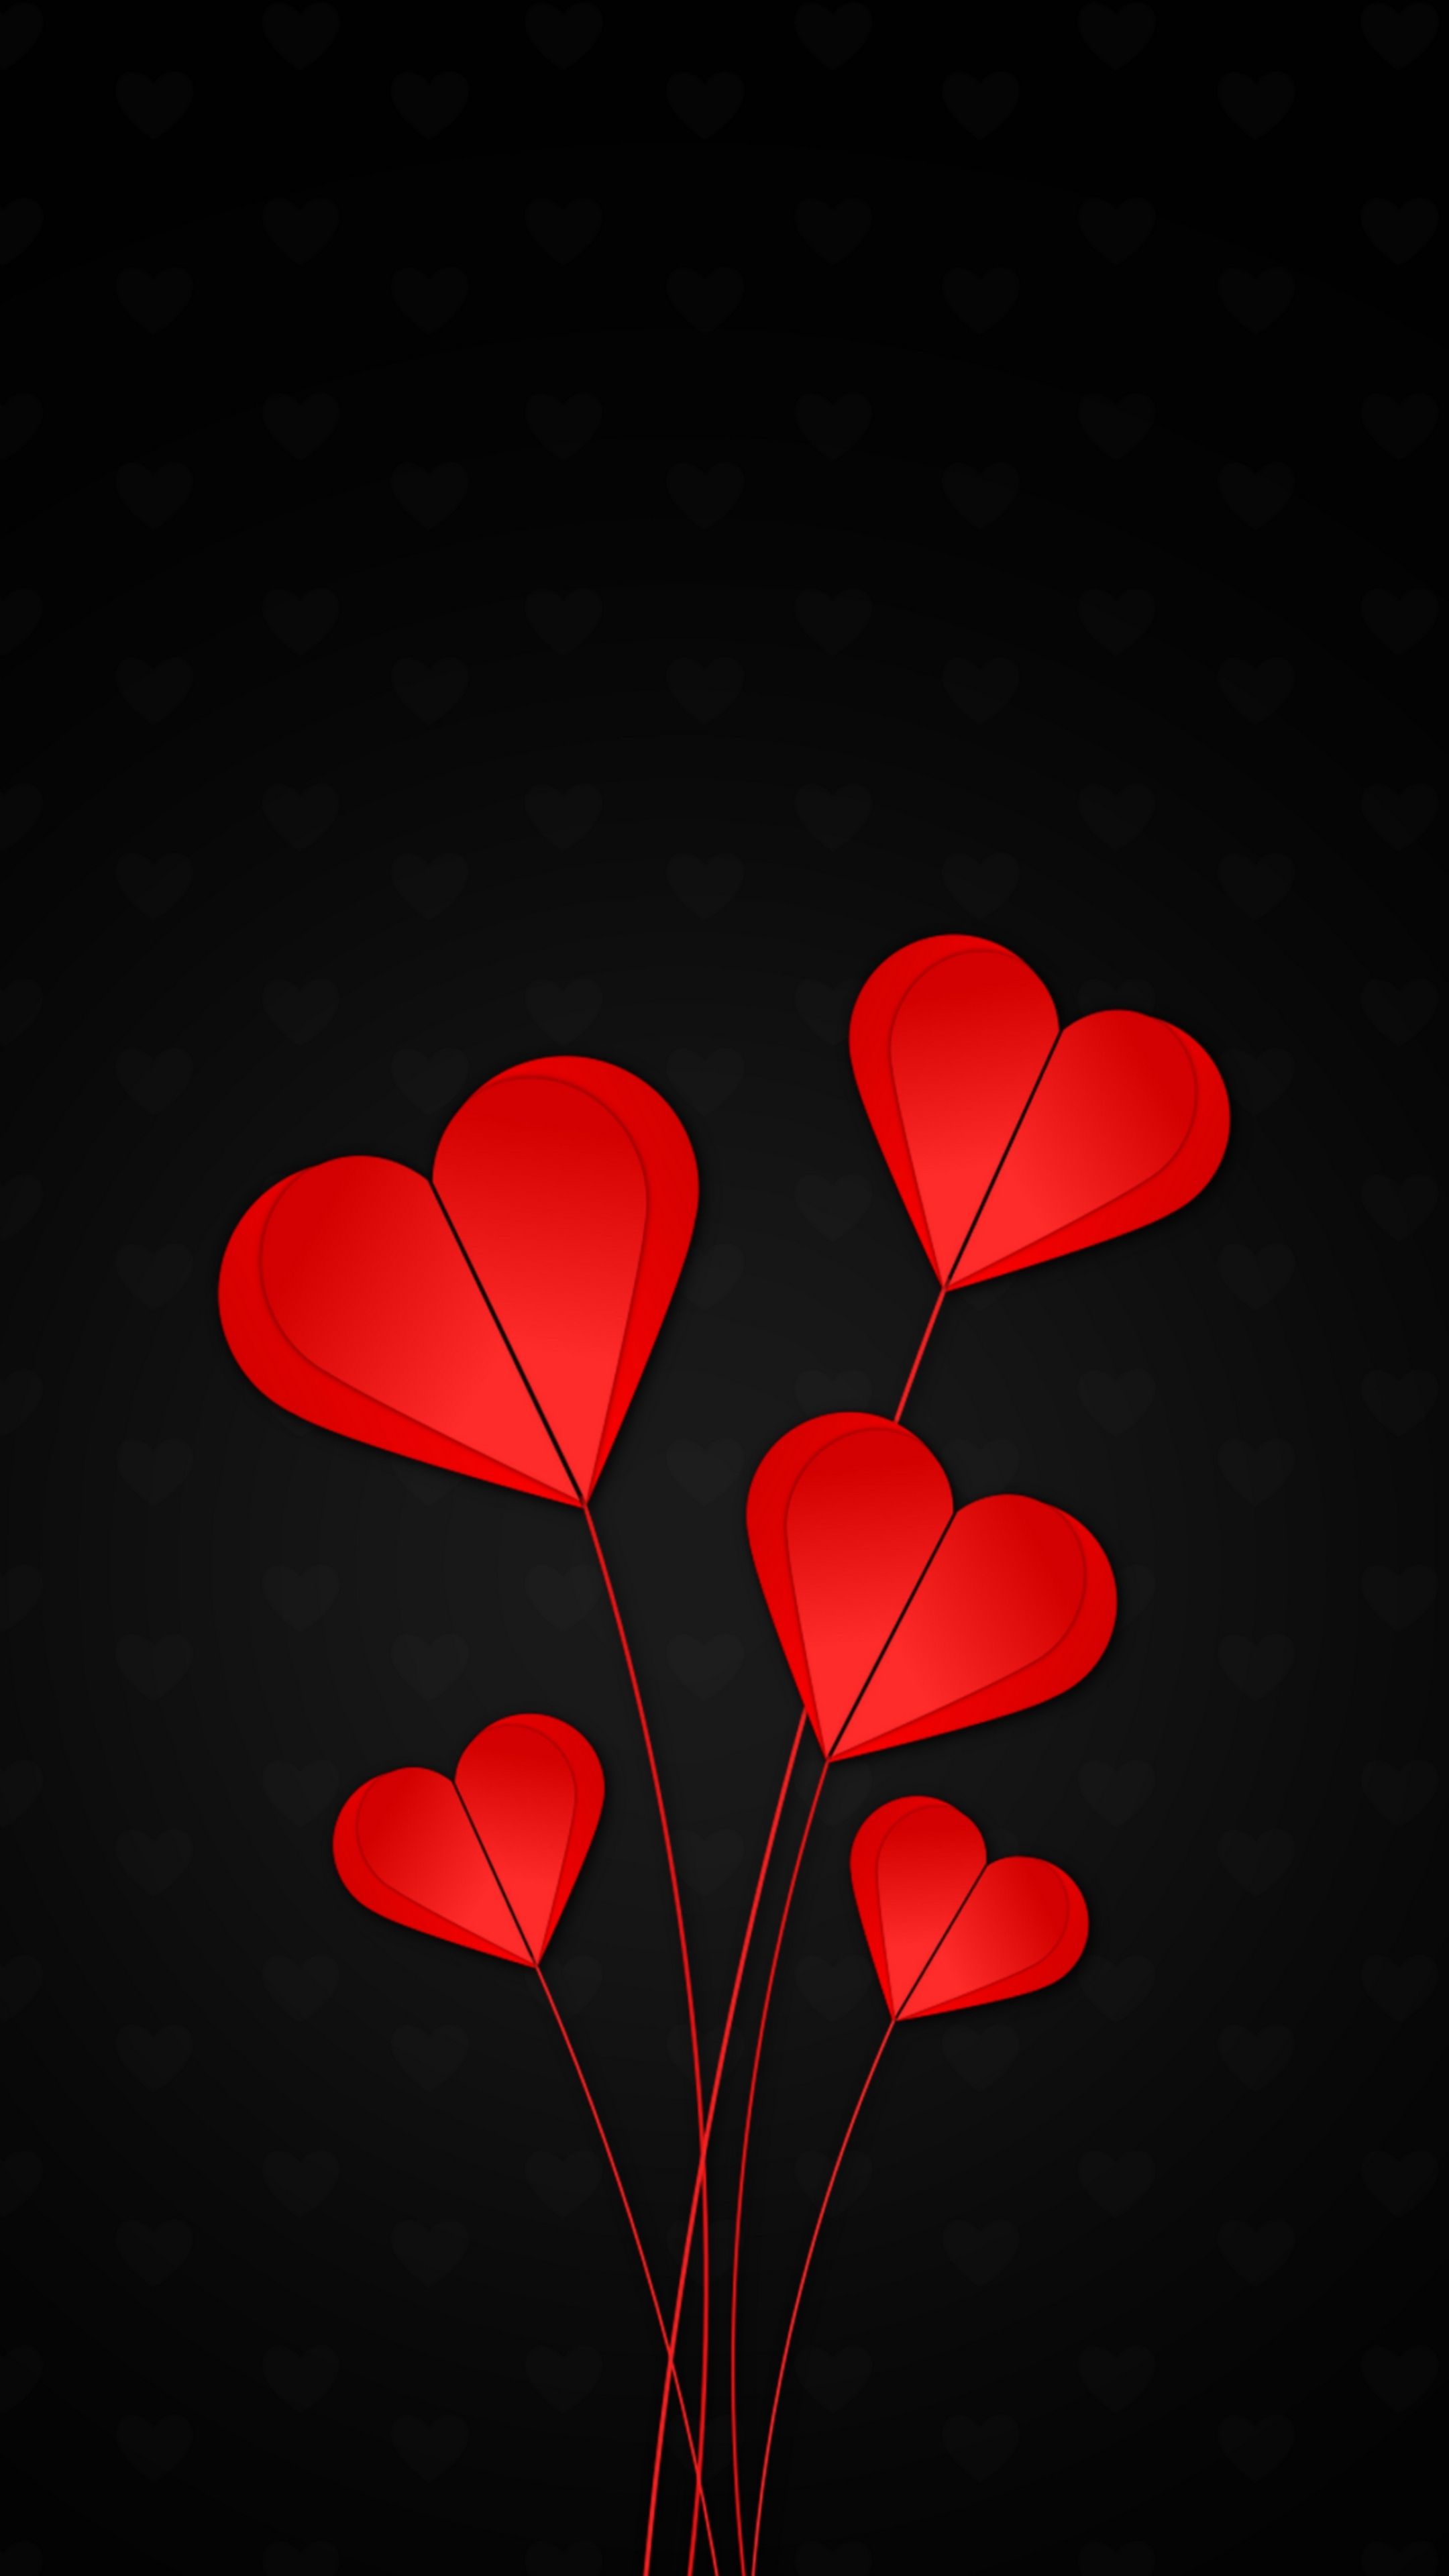 Emotions hearts, red, black background #android #wallpaper k #hd. Papeis de parede, Papeis de parede mickey, Ilustração bonita